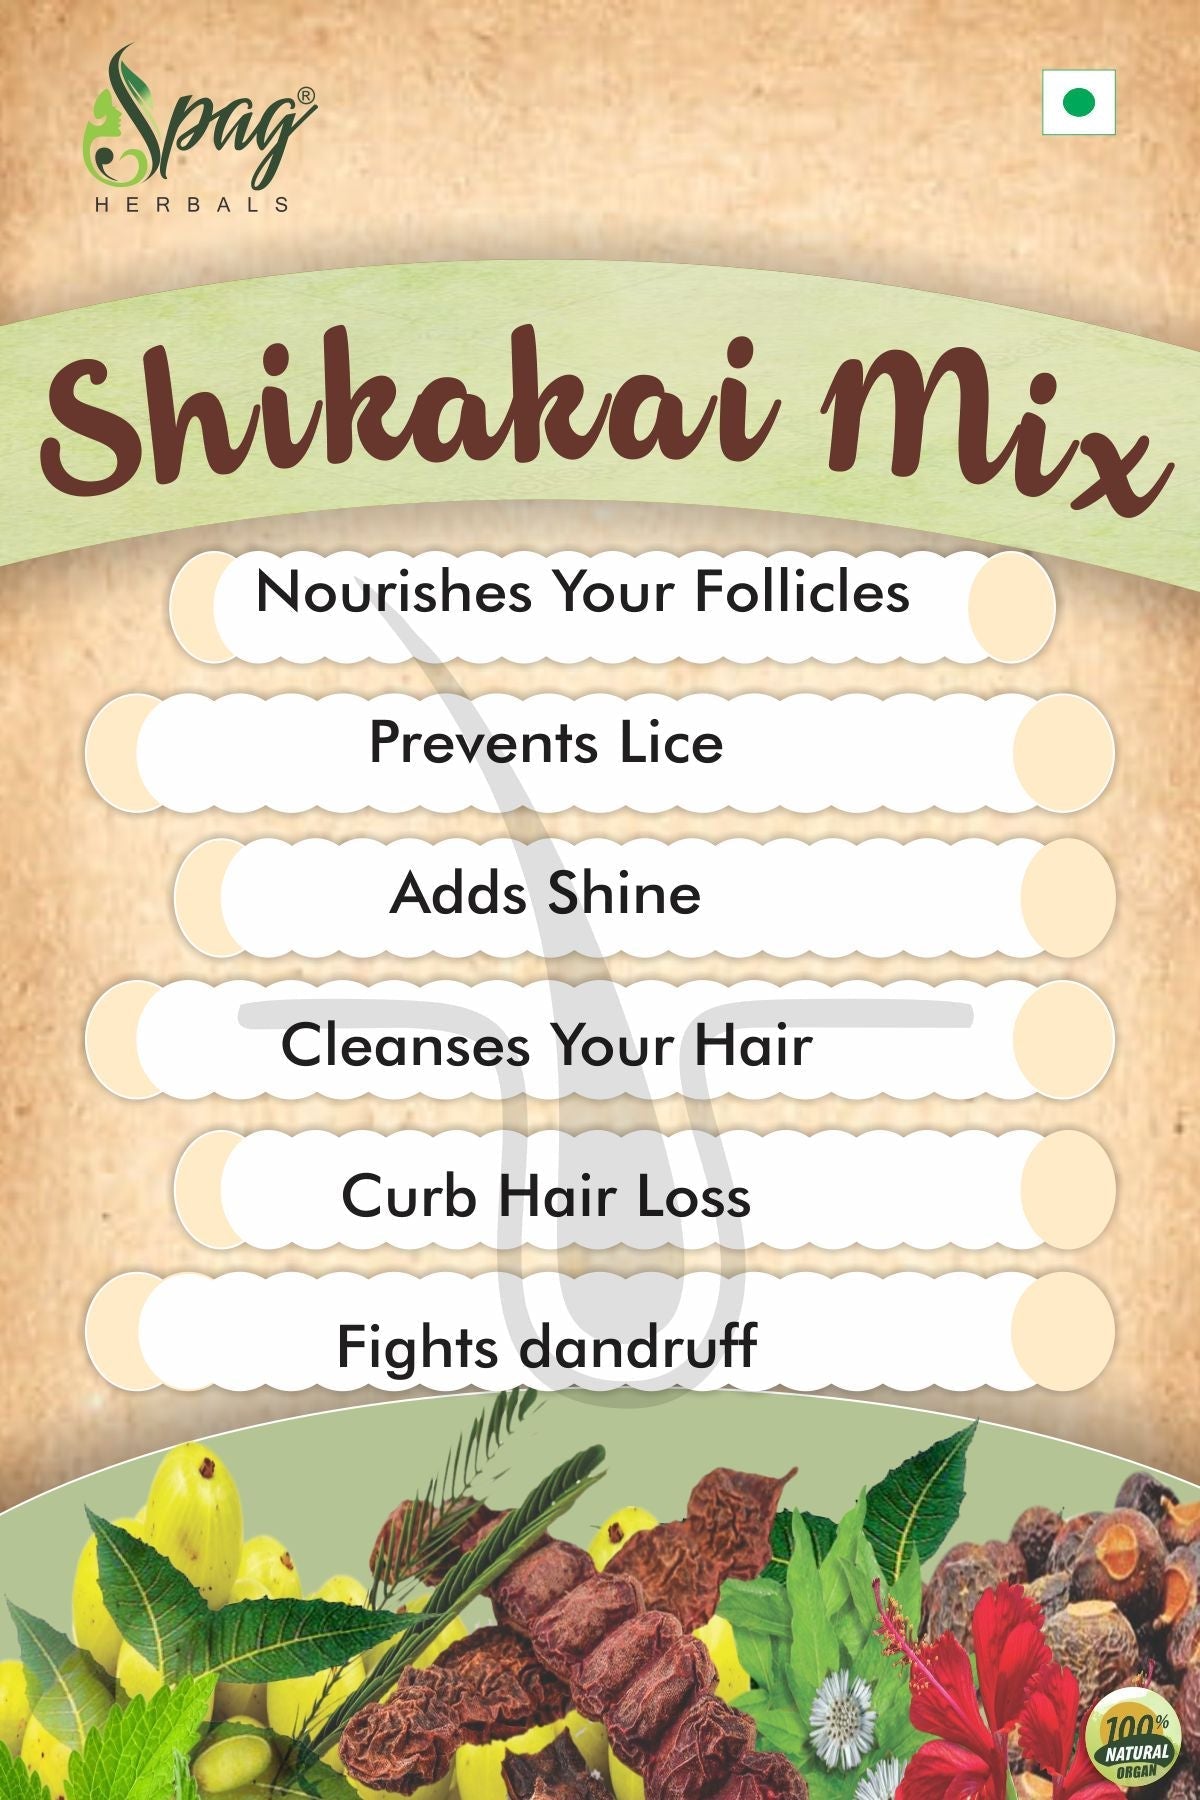 Spag Herbals Premium Shikakai Mix Powder